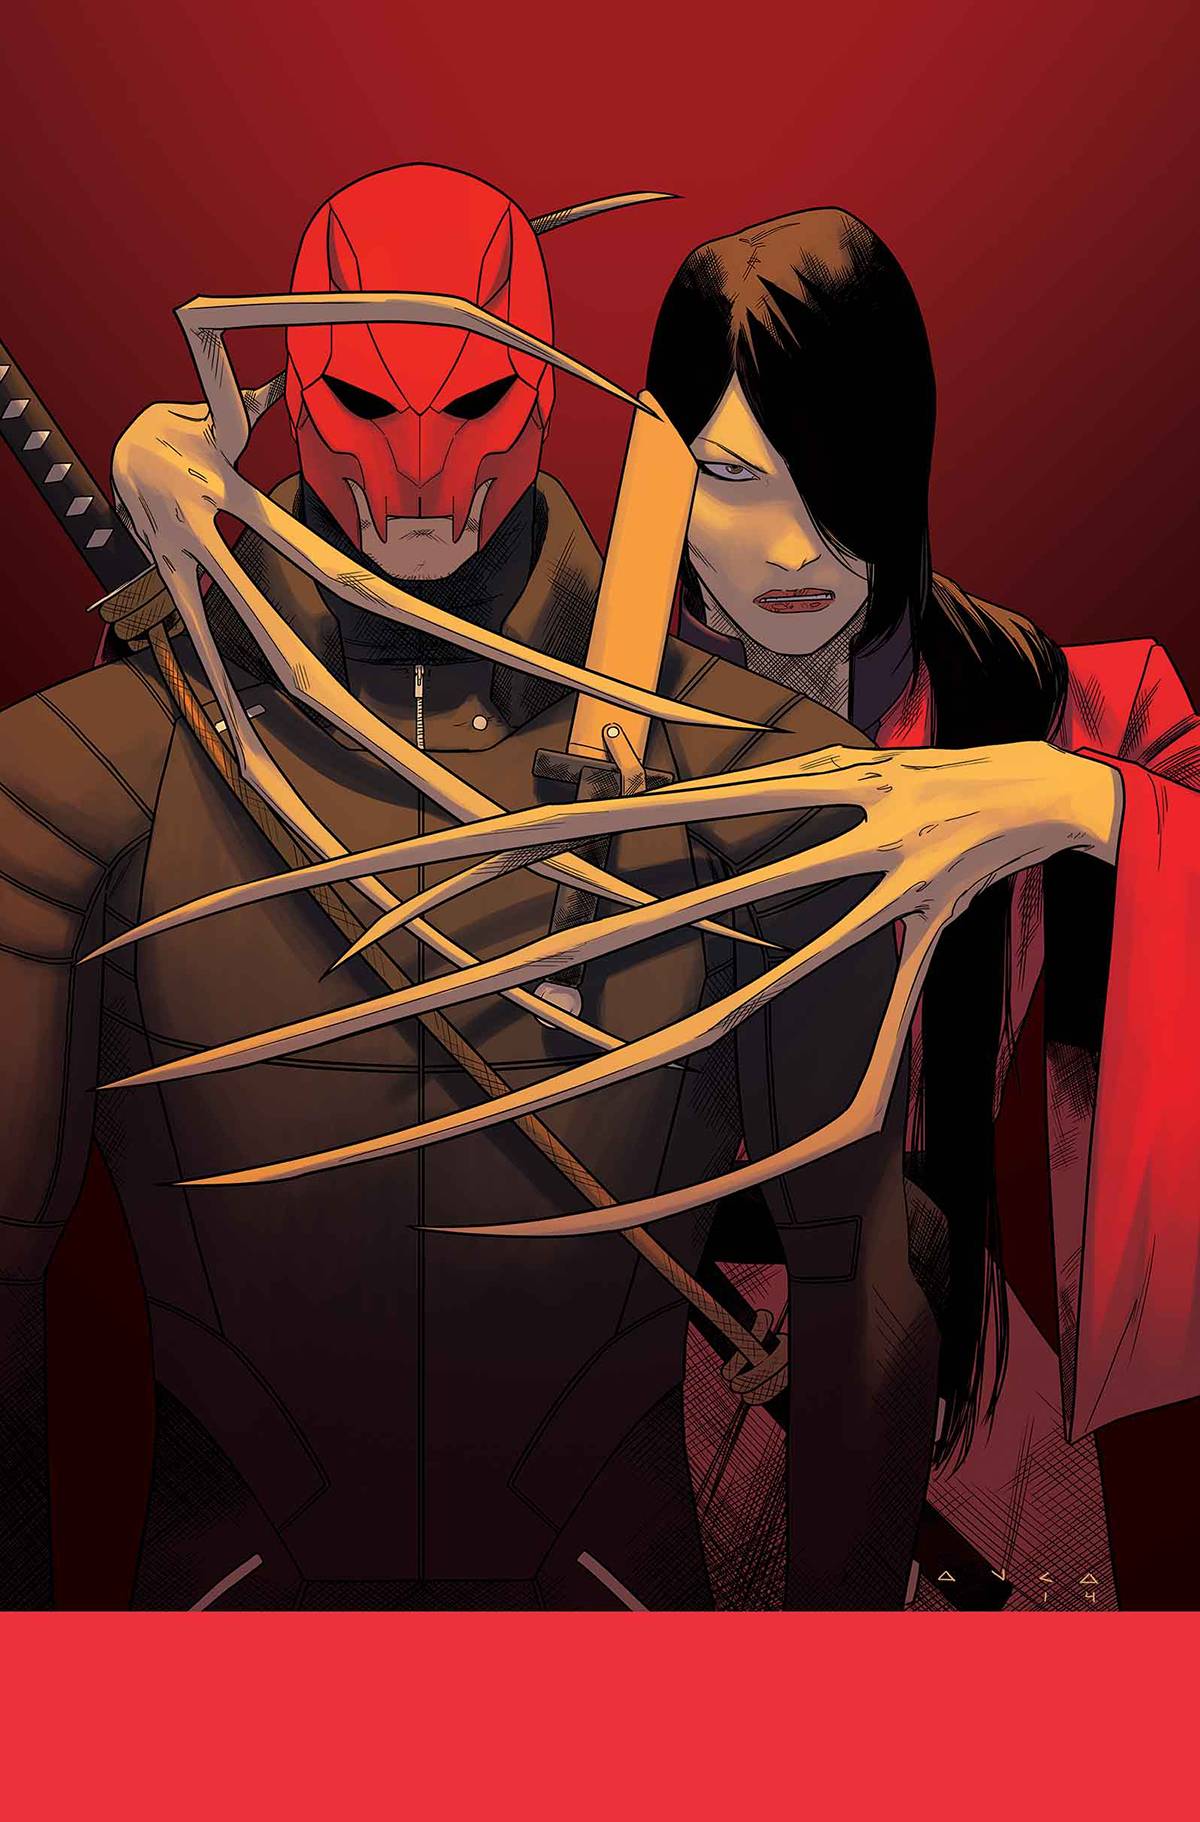 Wolverines #12 (2015)